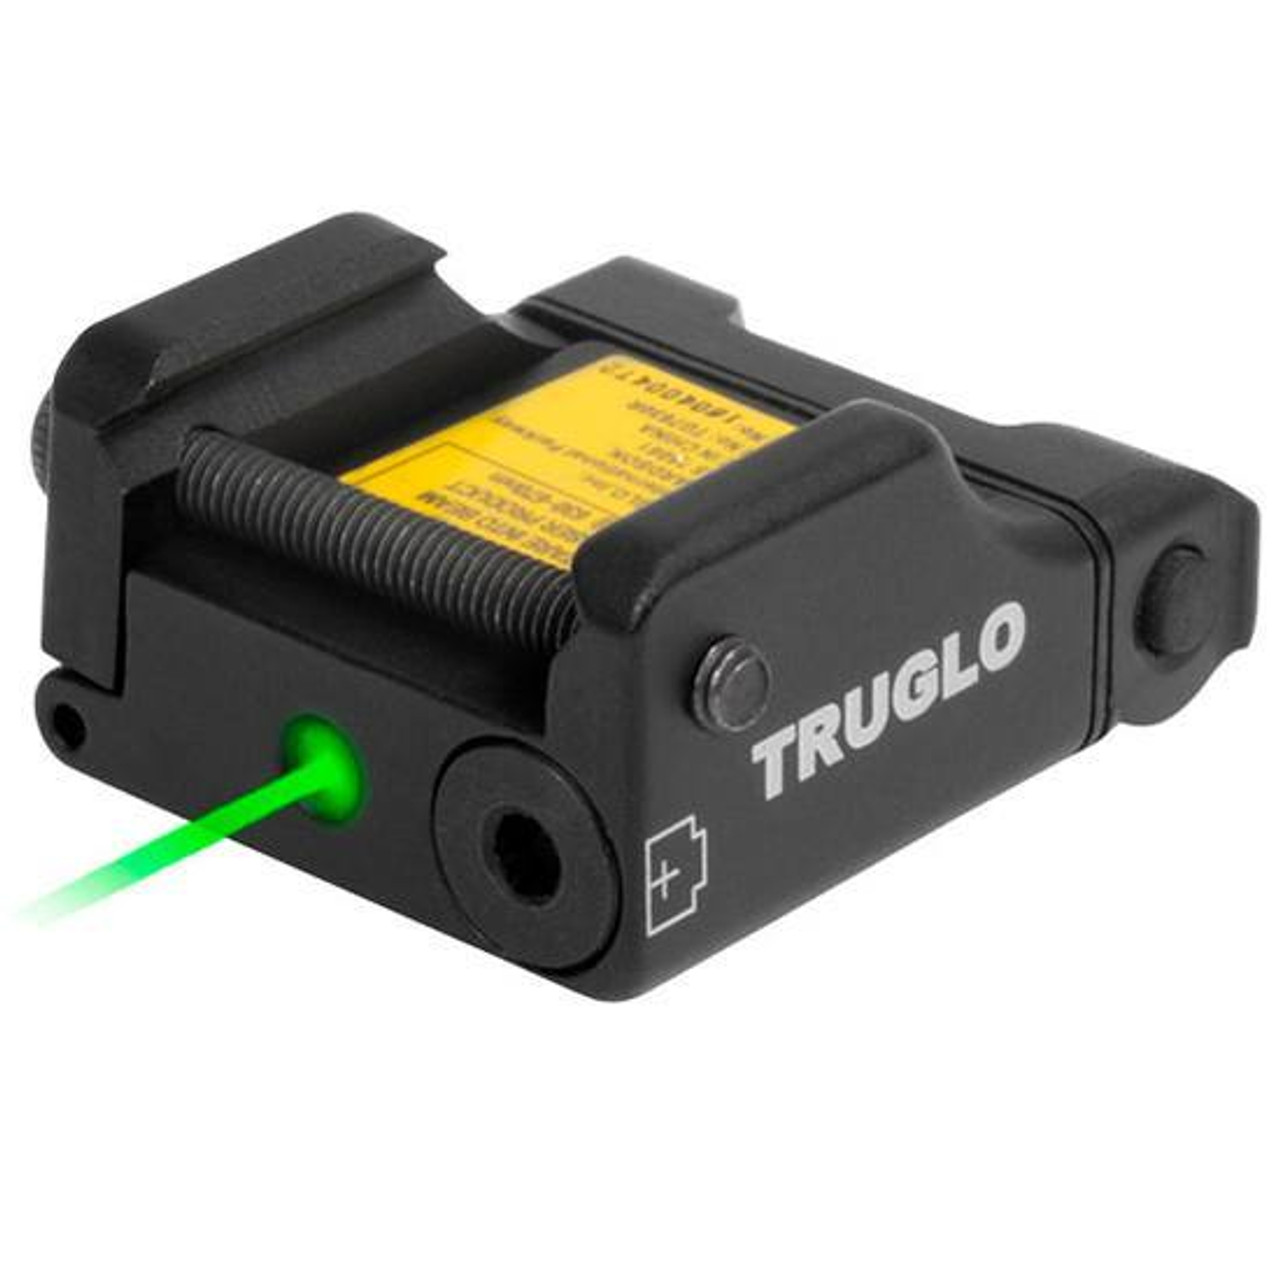 TRUGLO Micro Tac Tactical Black Dirt Aluminum Picatinny Than - TG7630G LR626 Green 2x Mount [FC-788130019153] Micro Cheaper Laser Batteries